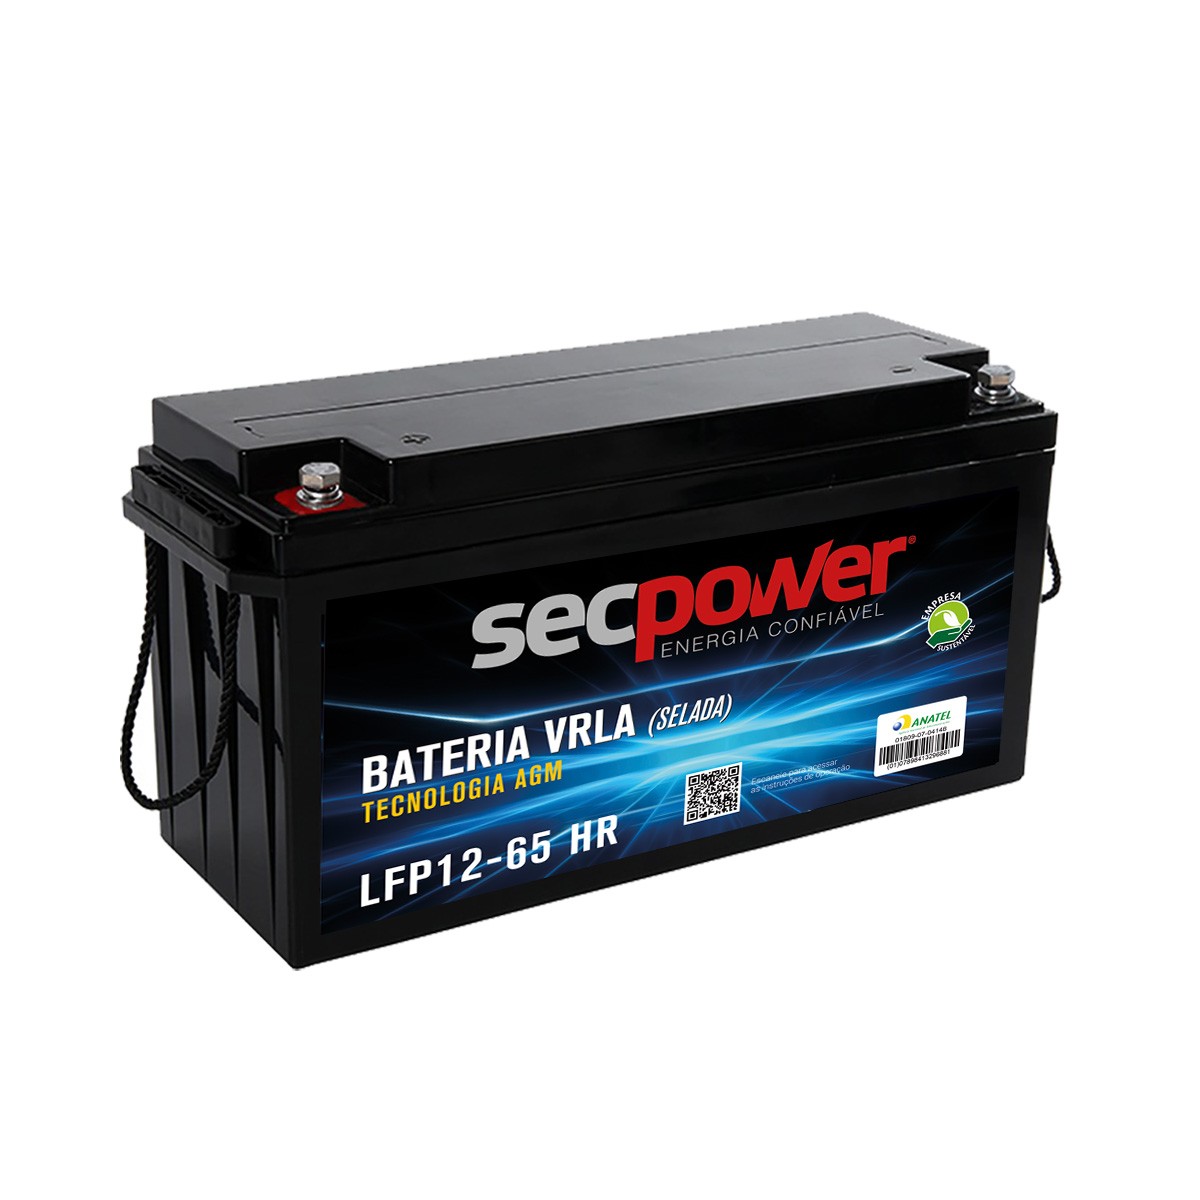 Bateria Chumbo Ácida VRLA AGM – Sec Power – LFP12-65 HR240W